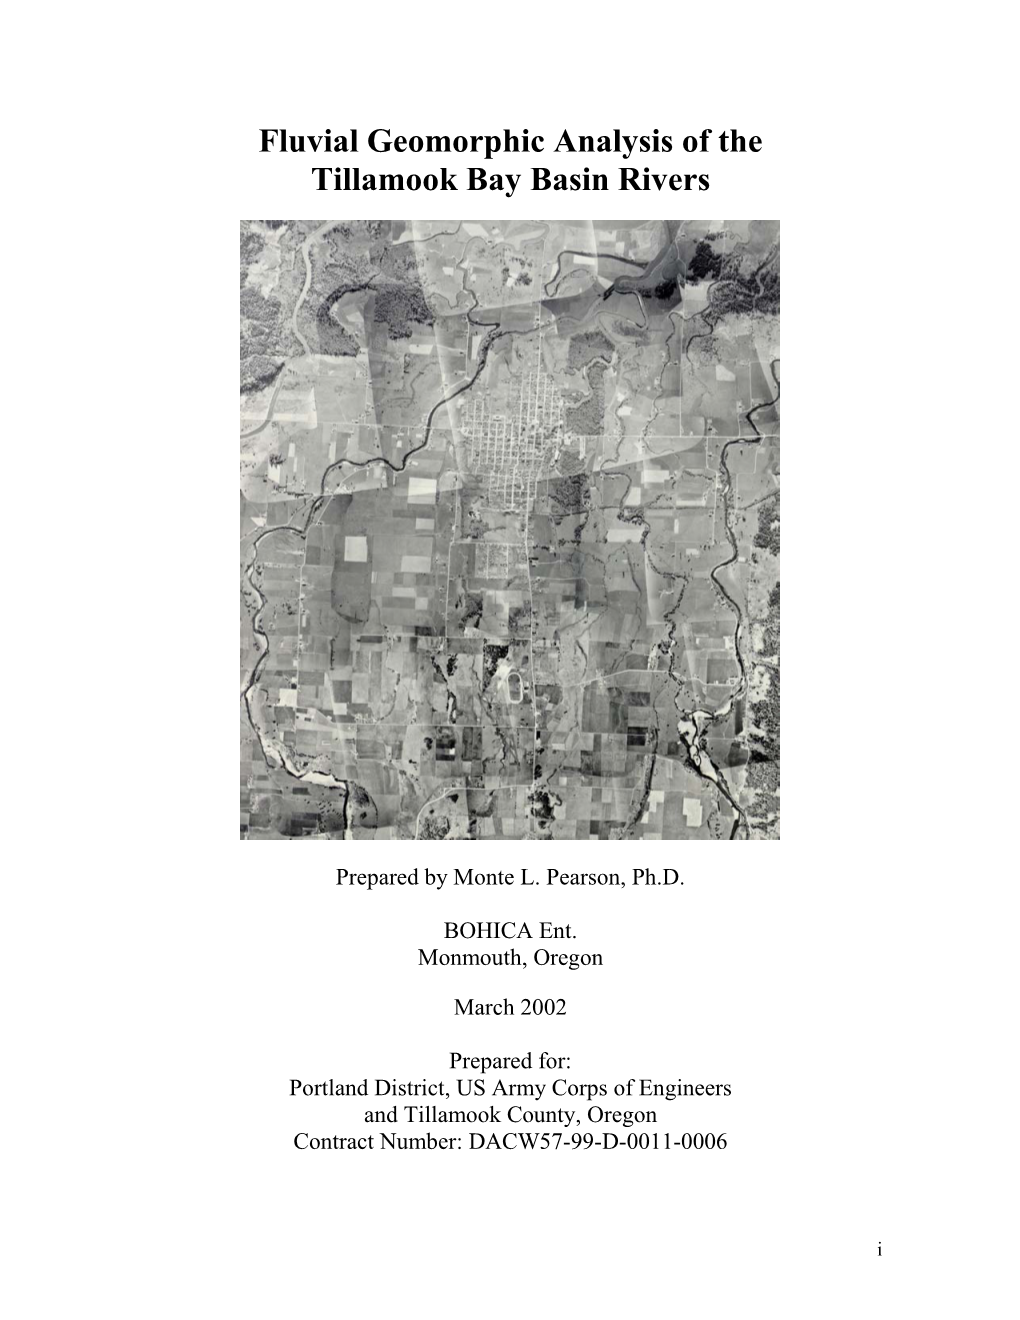 Fluvial Geomorphic Analysis of the Tillamook Bay Basin Rivers